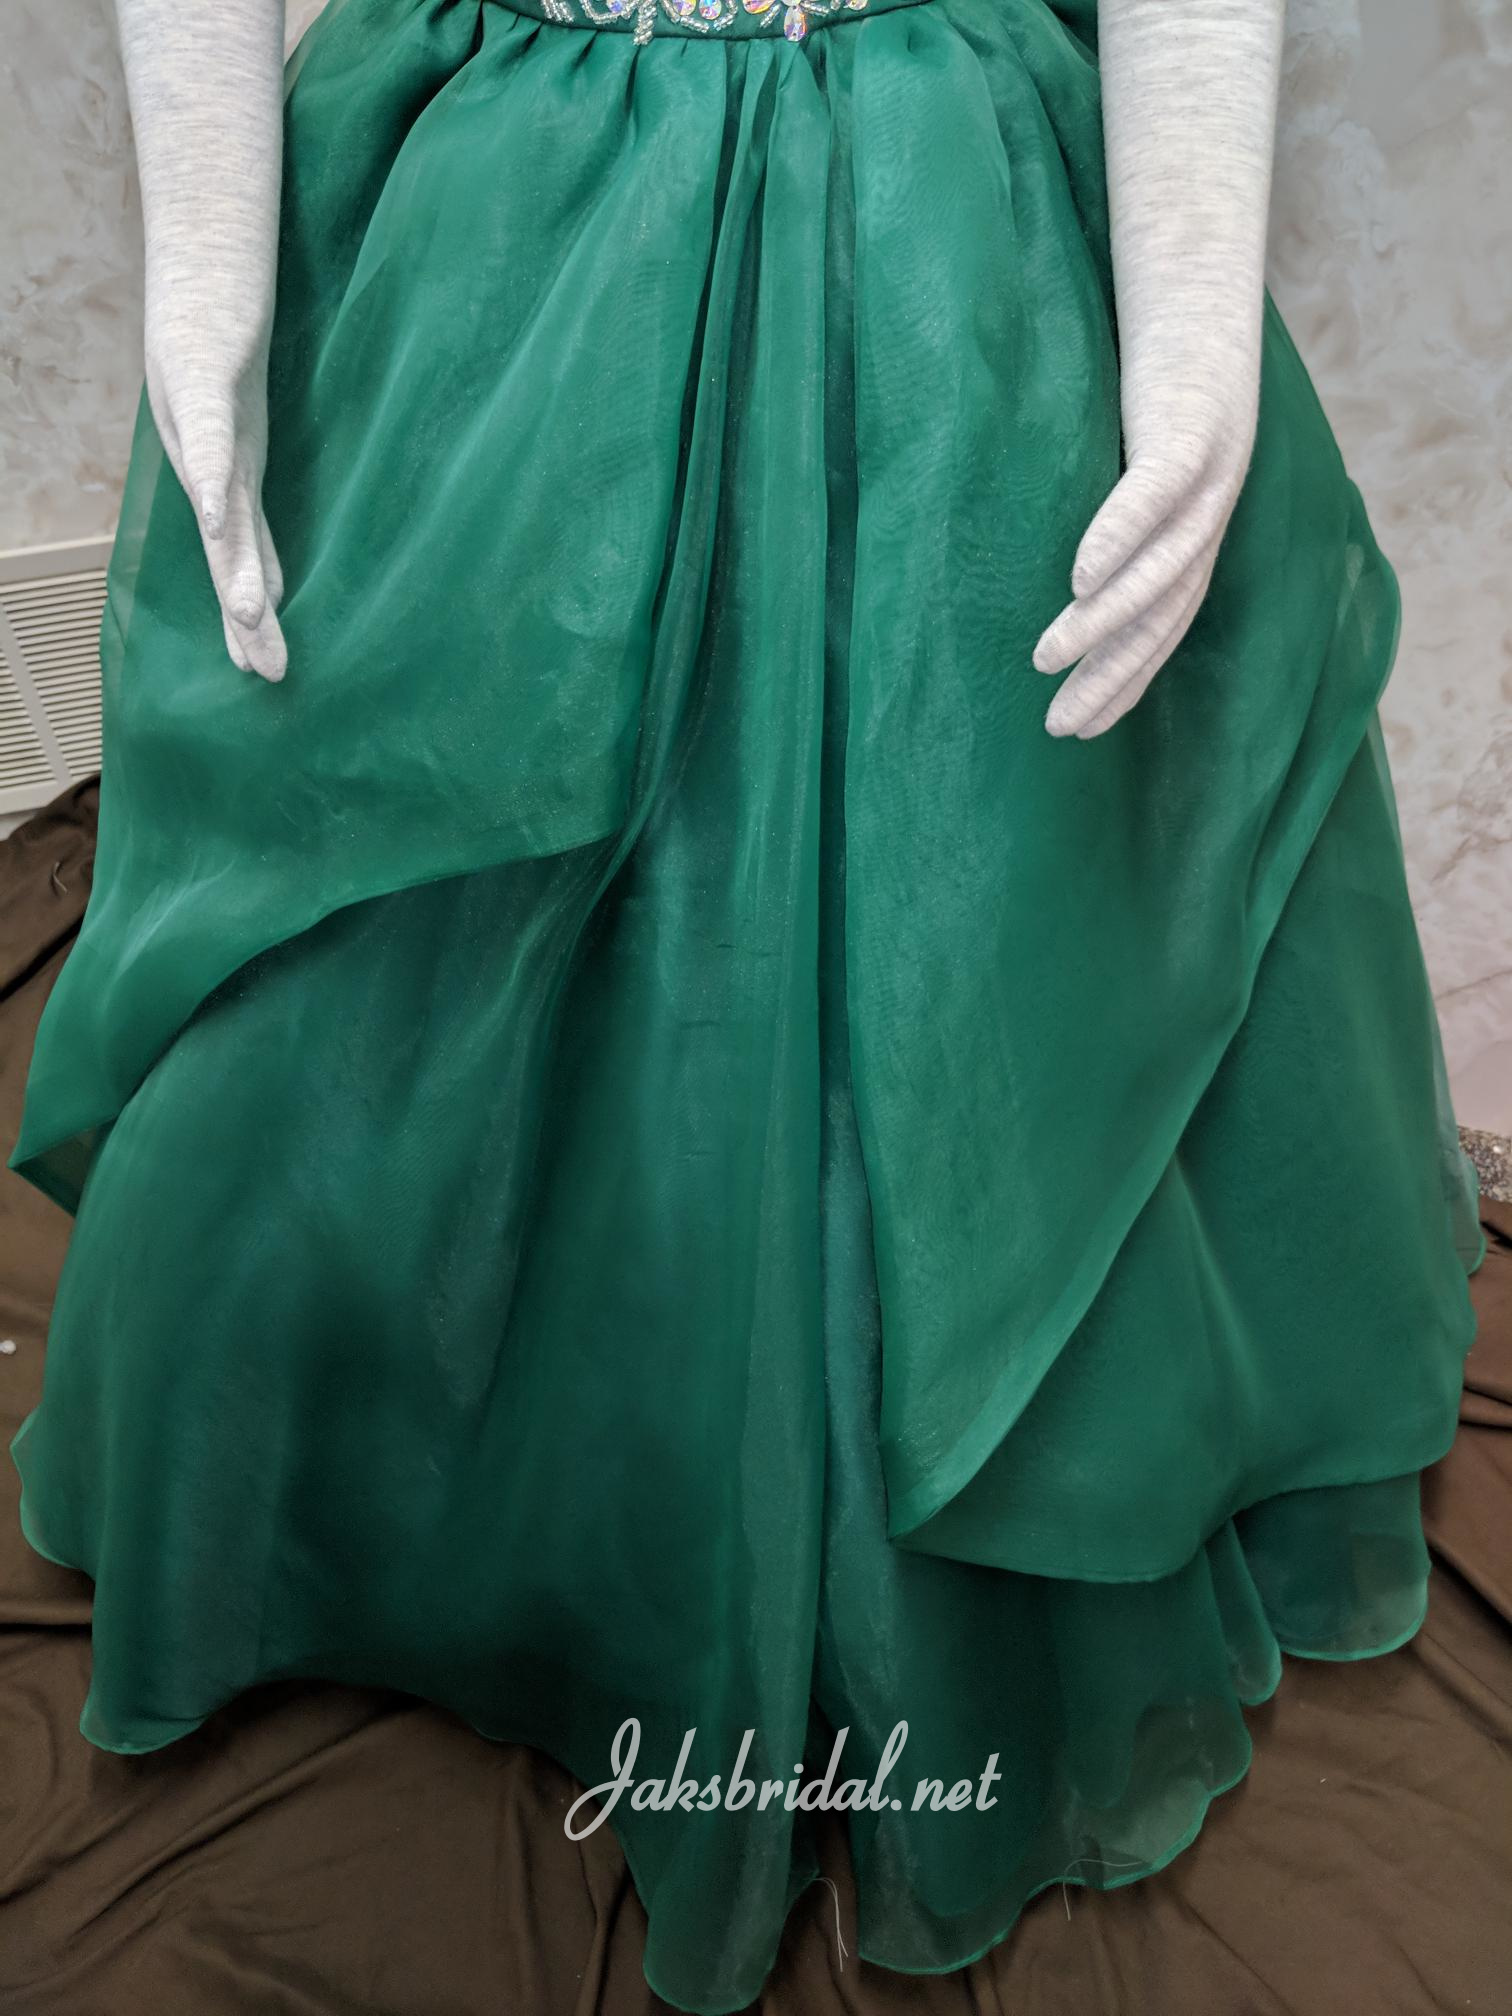 green floor length dress